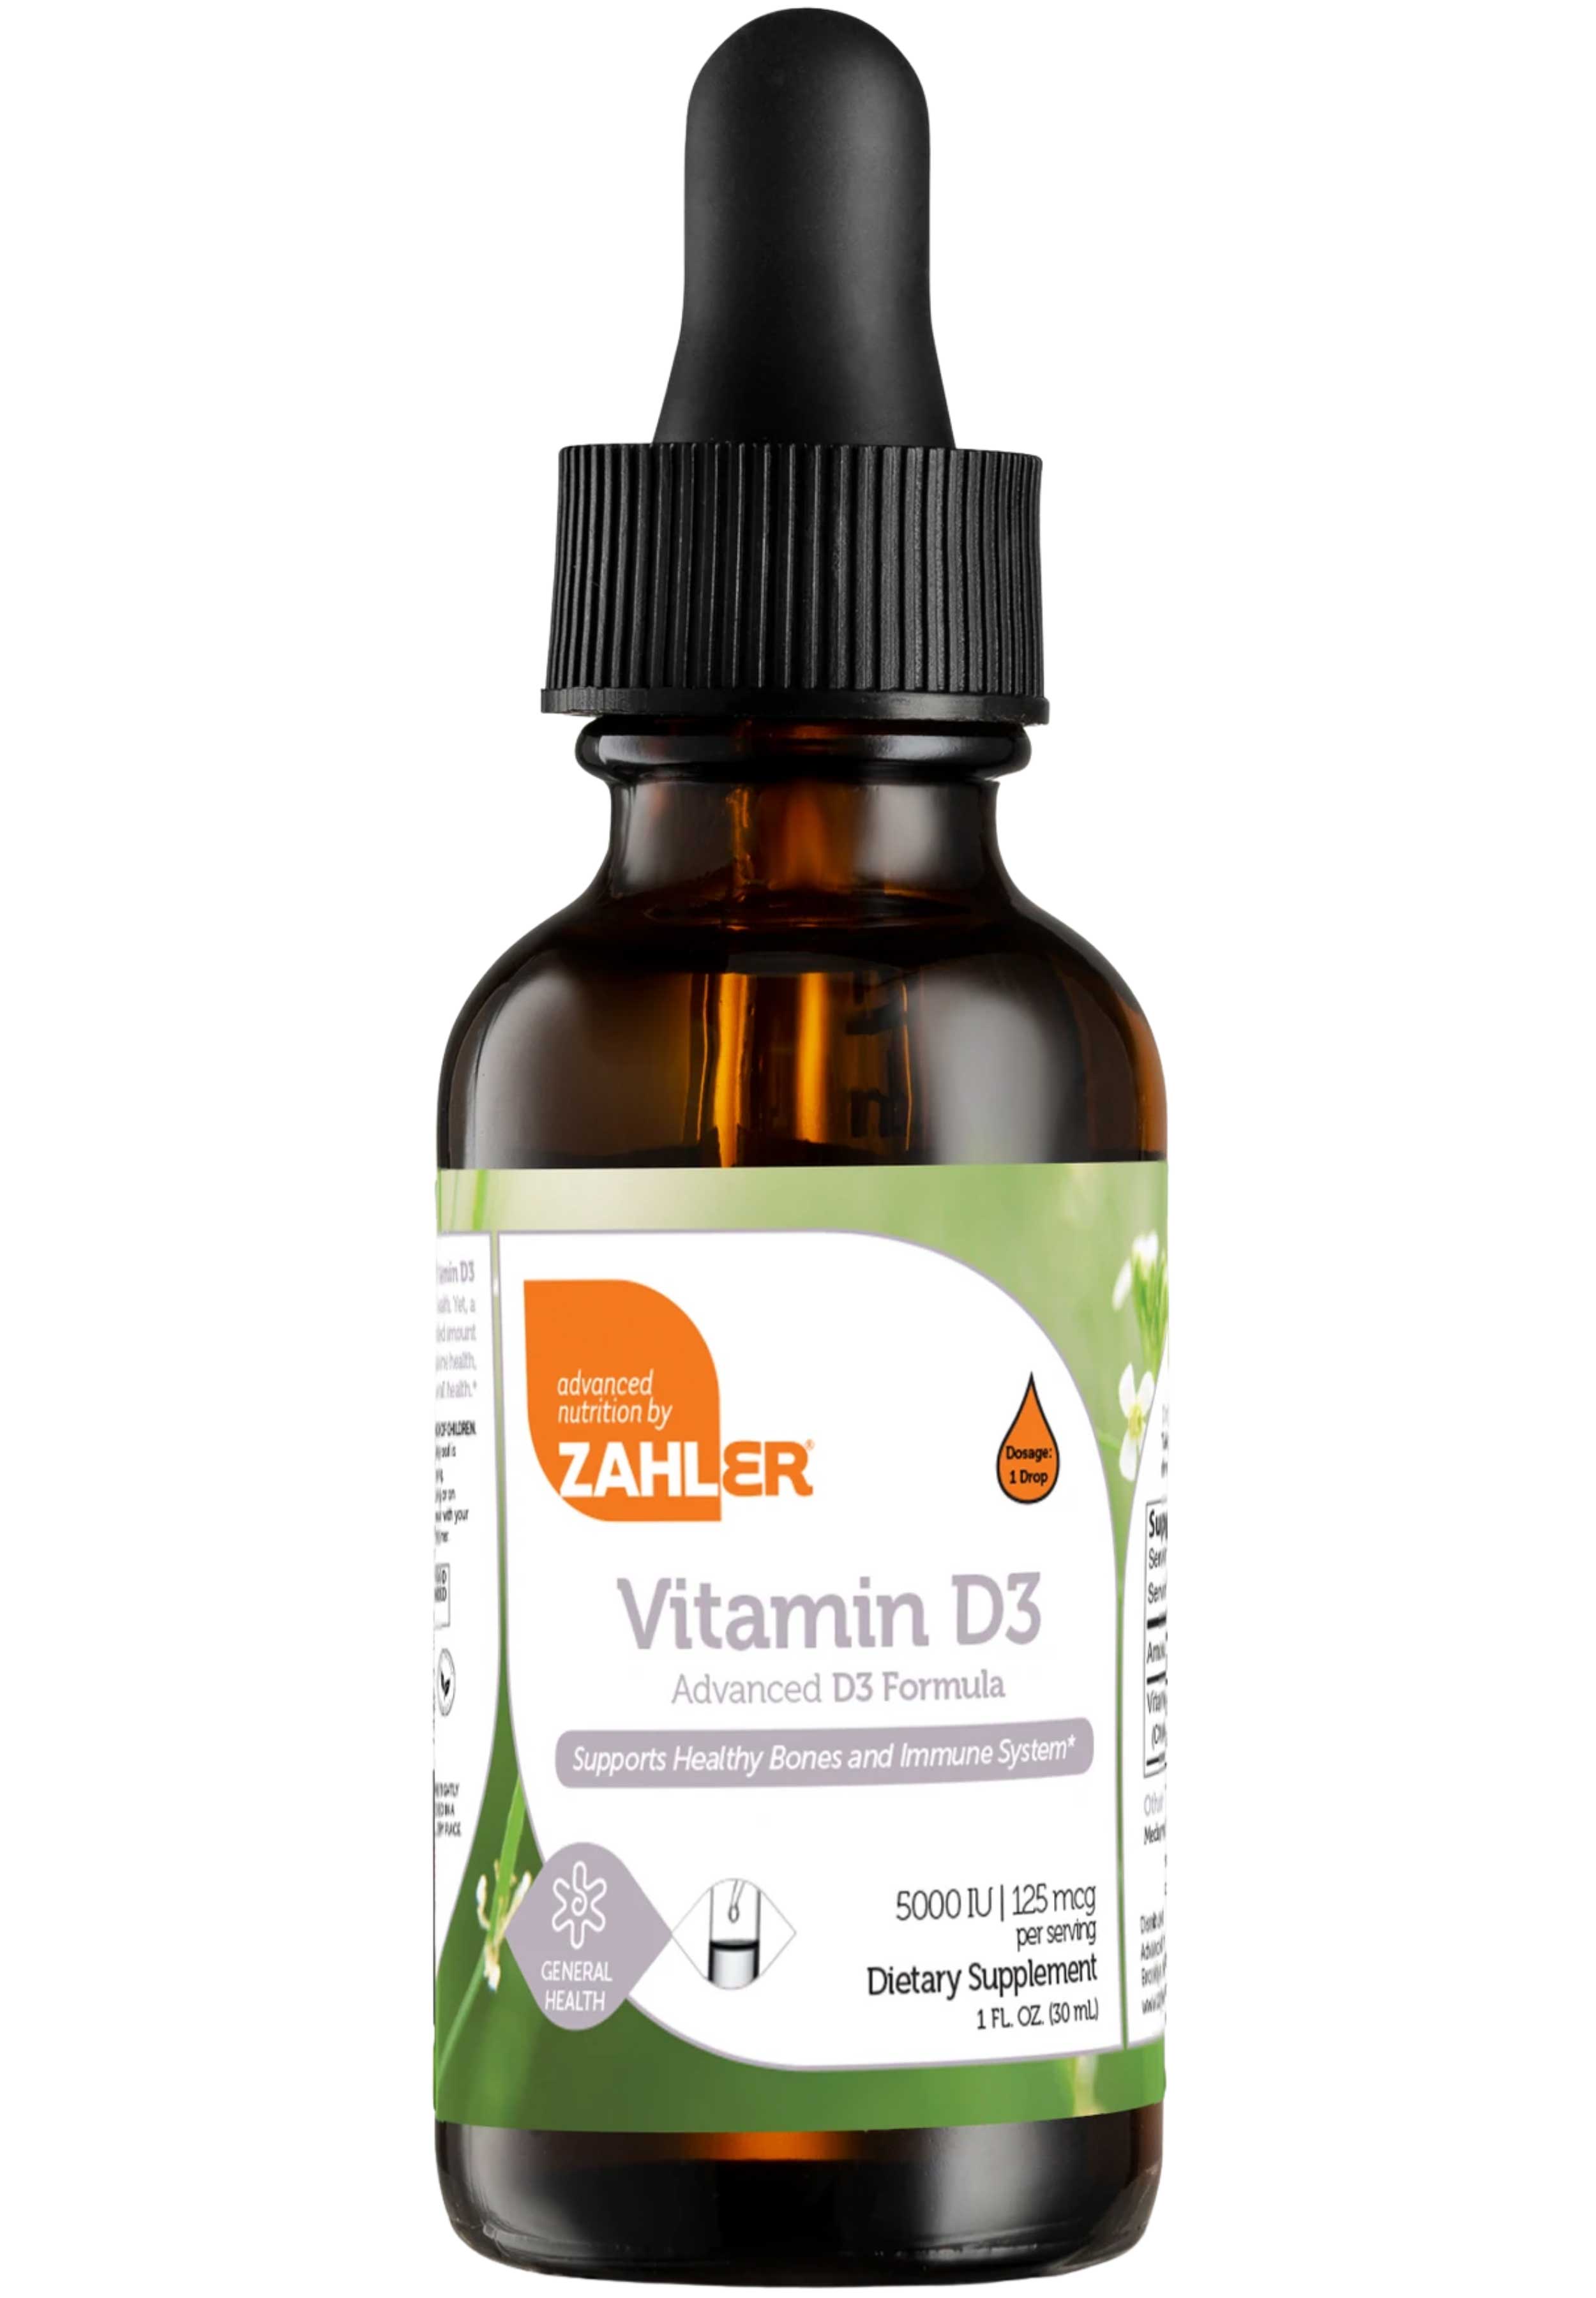 Advanced Nutrition By Zahler Vitamin D3 5000 IU